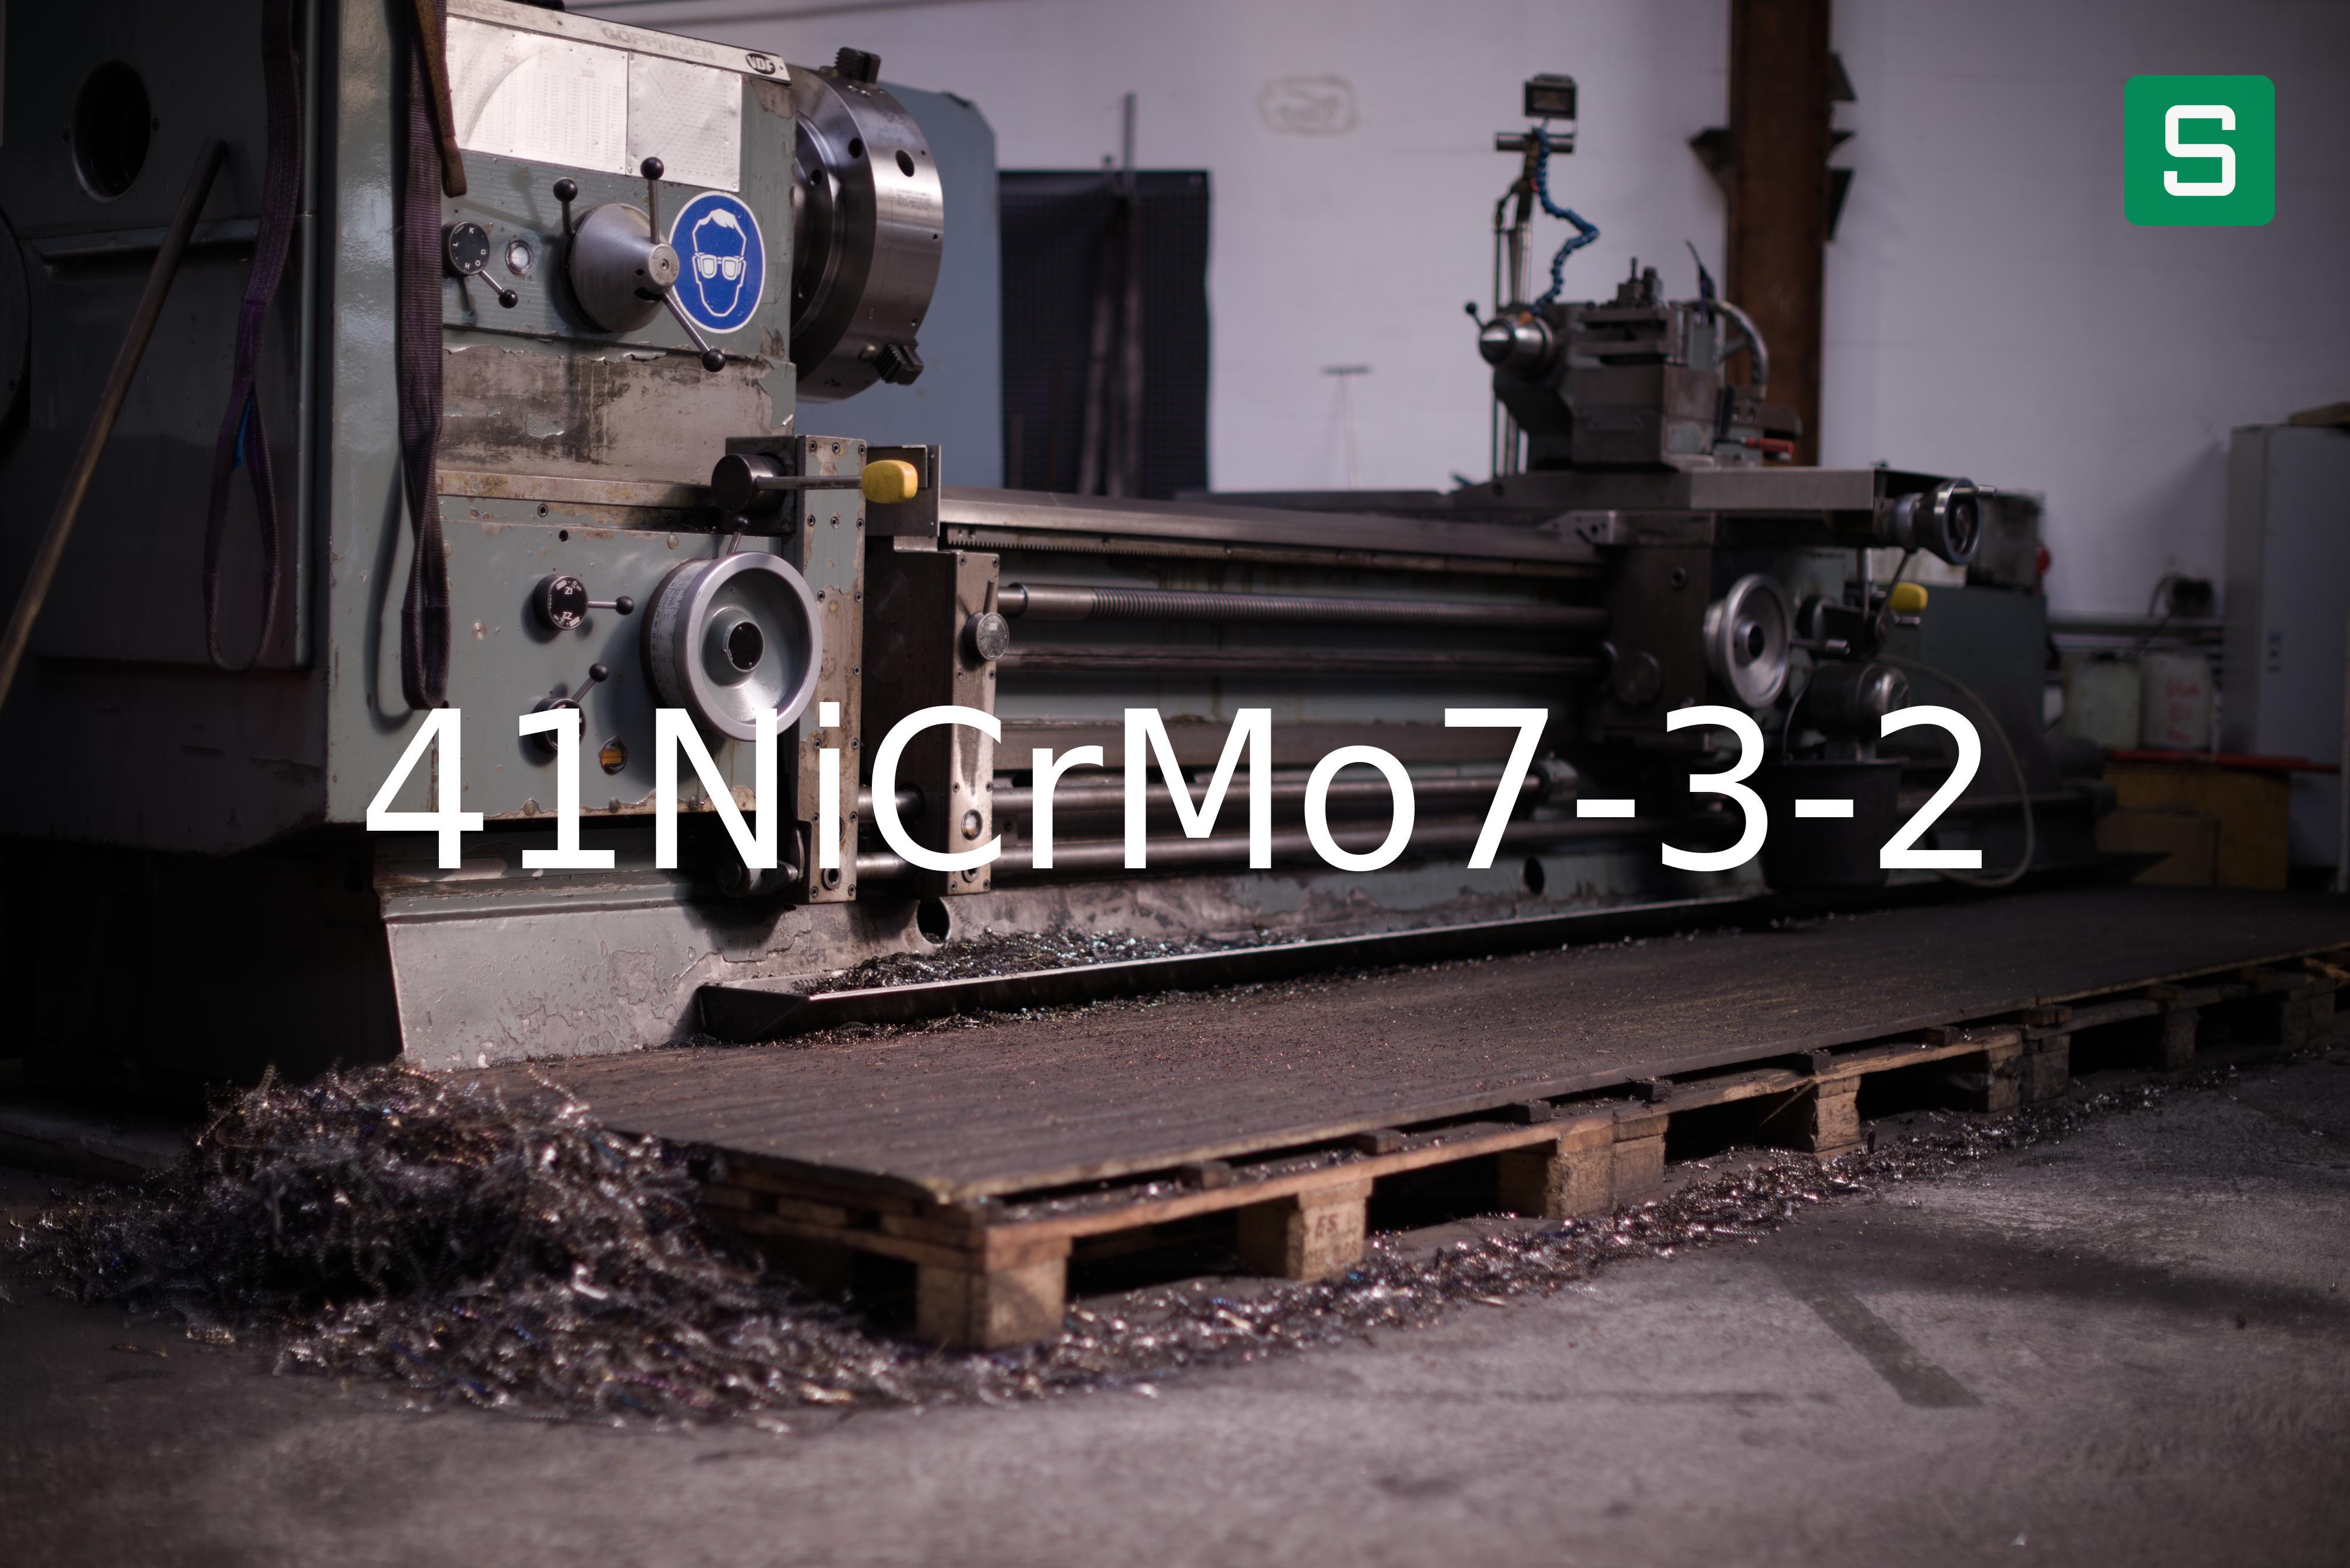 Steel Material: 41NiCrMo7-3-2